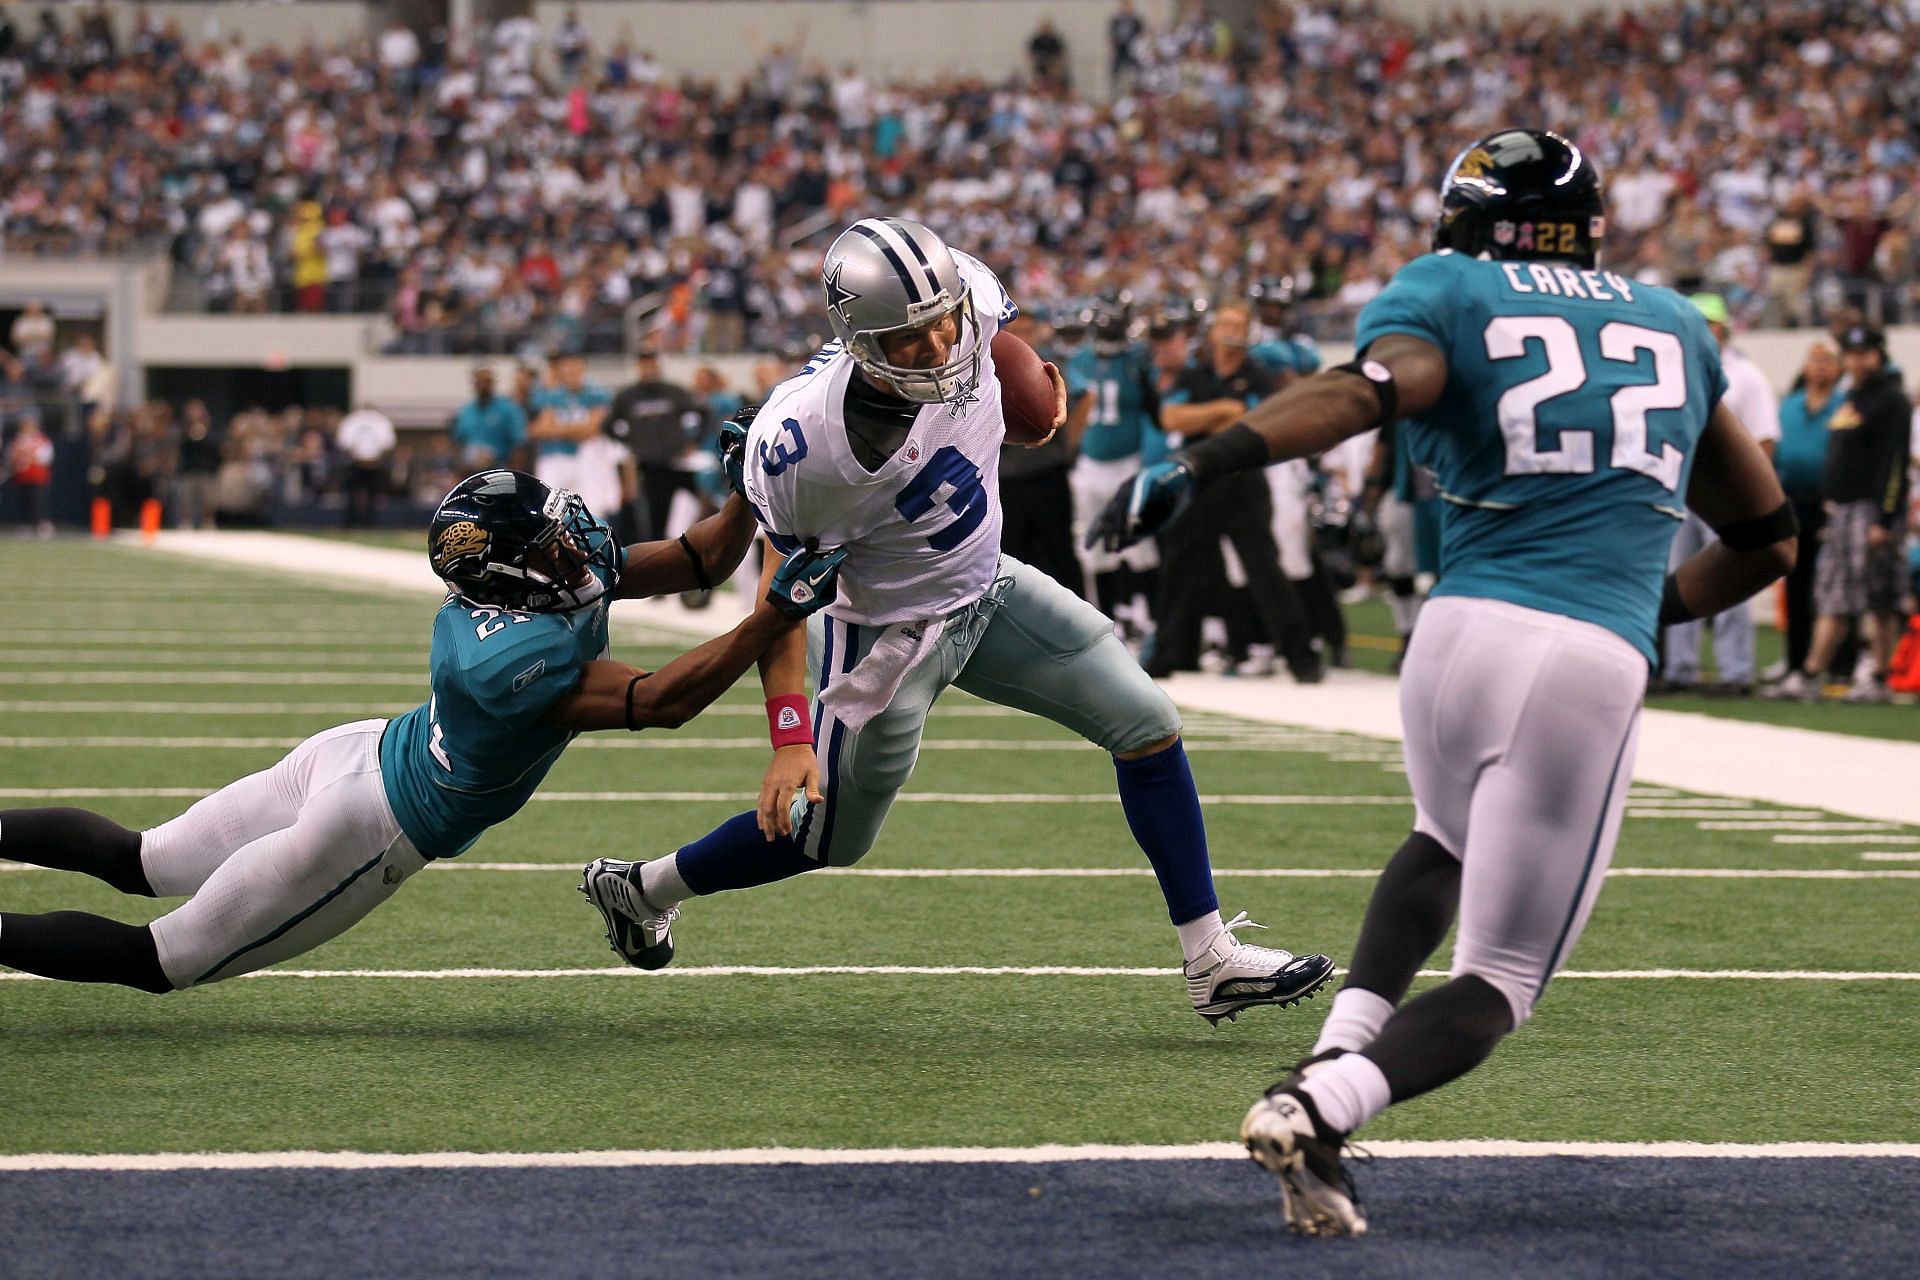 Jon Kitna scores a touchdown for the Dallas Cowboys